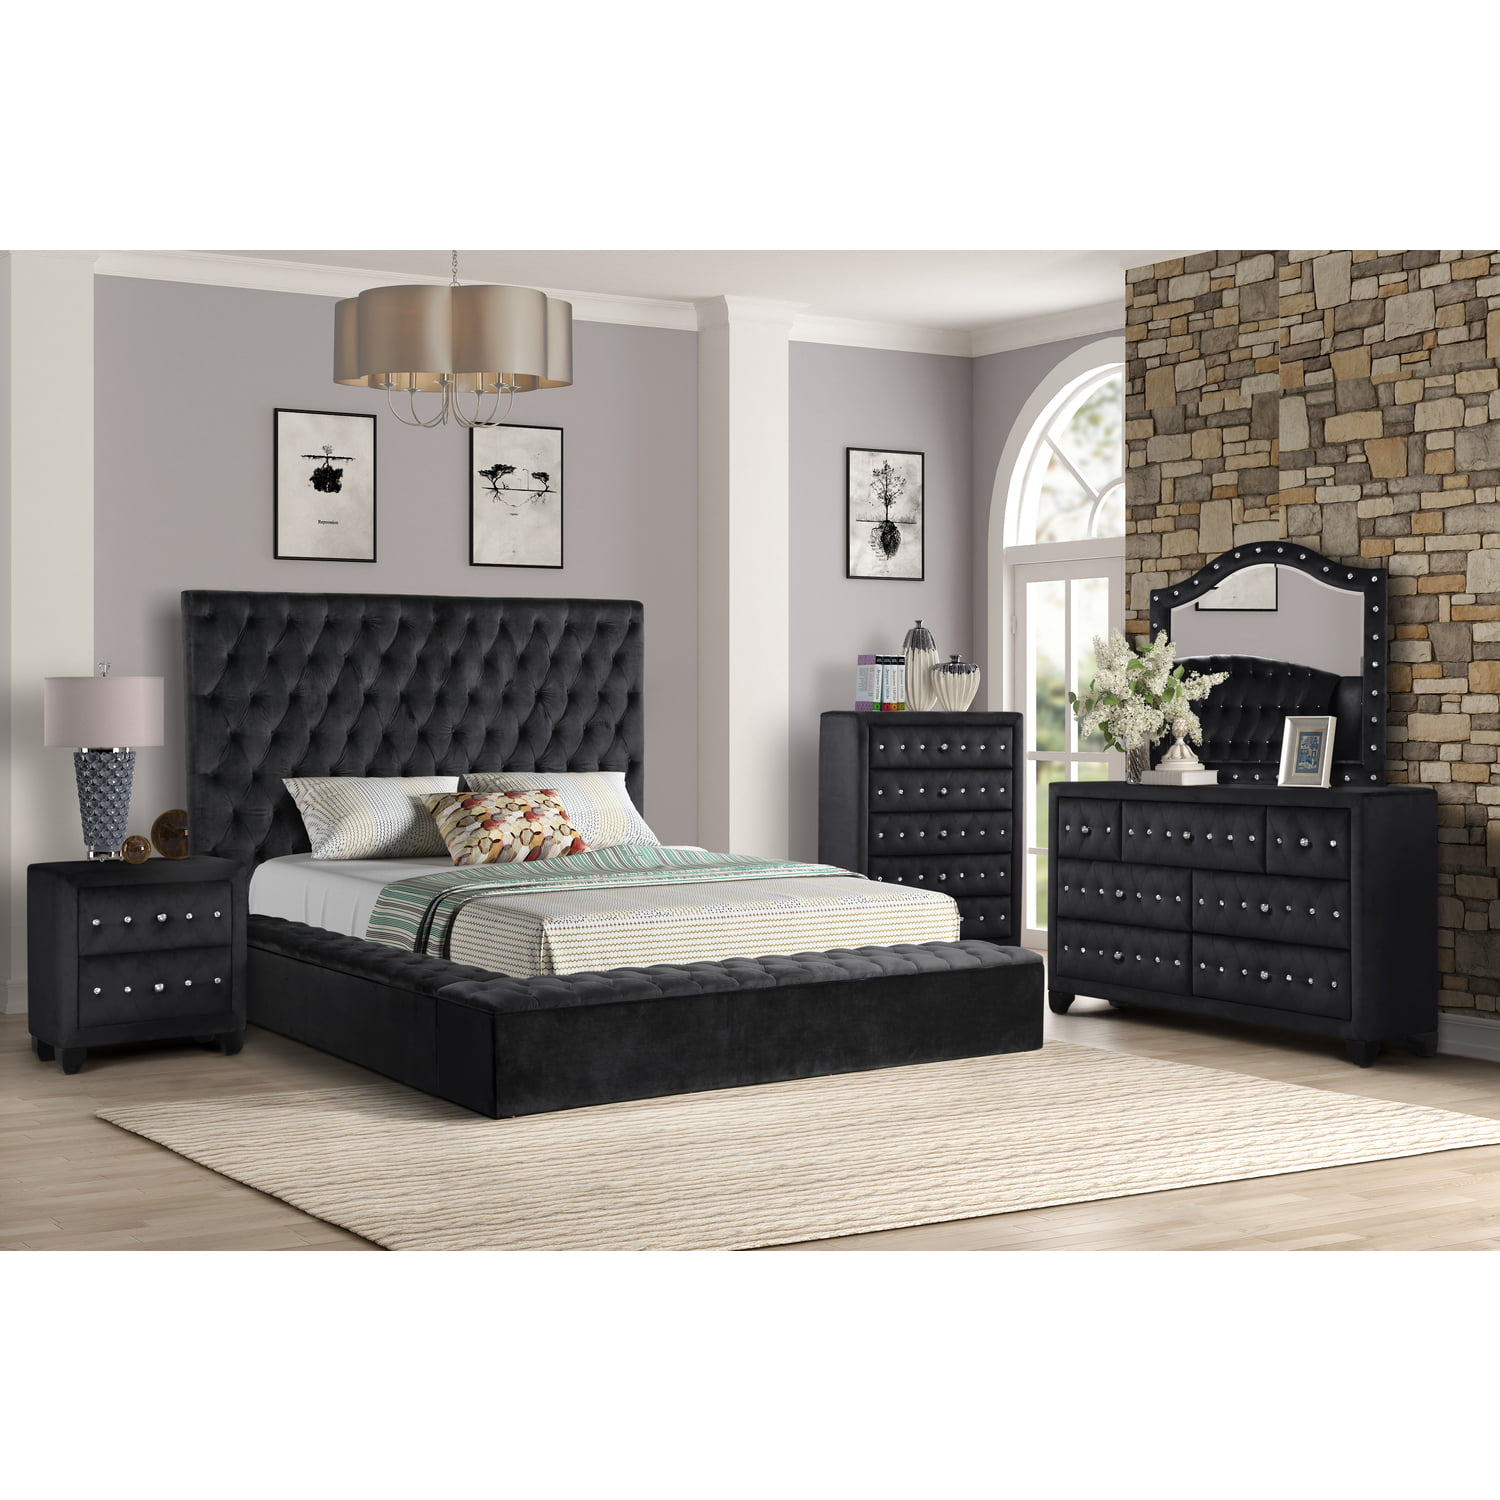 Galaxy Home FurnishingsNora Queen 5-N pc Bedroom set in Black 